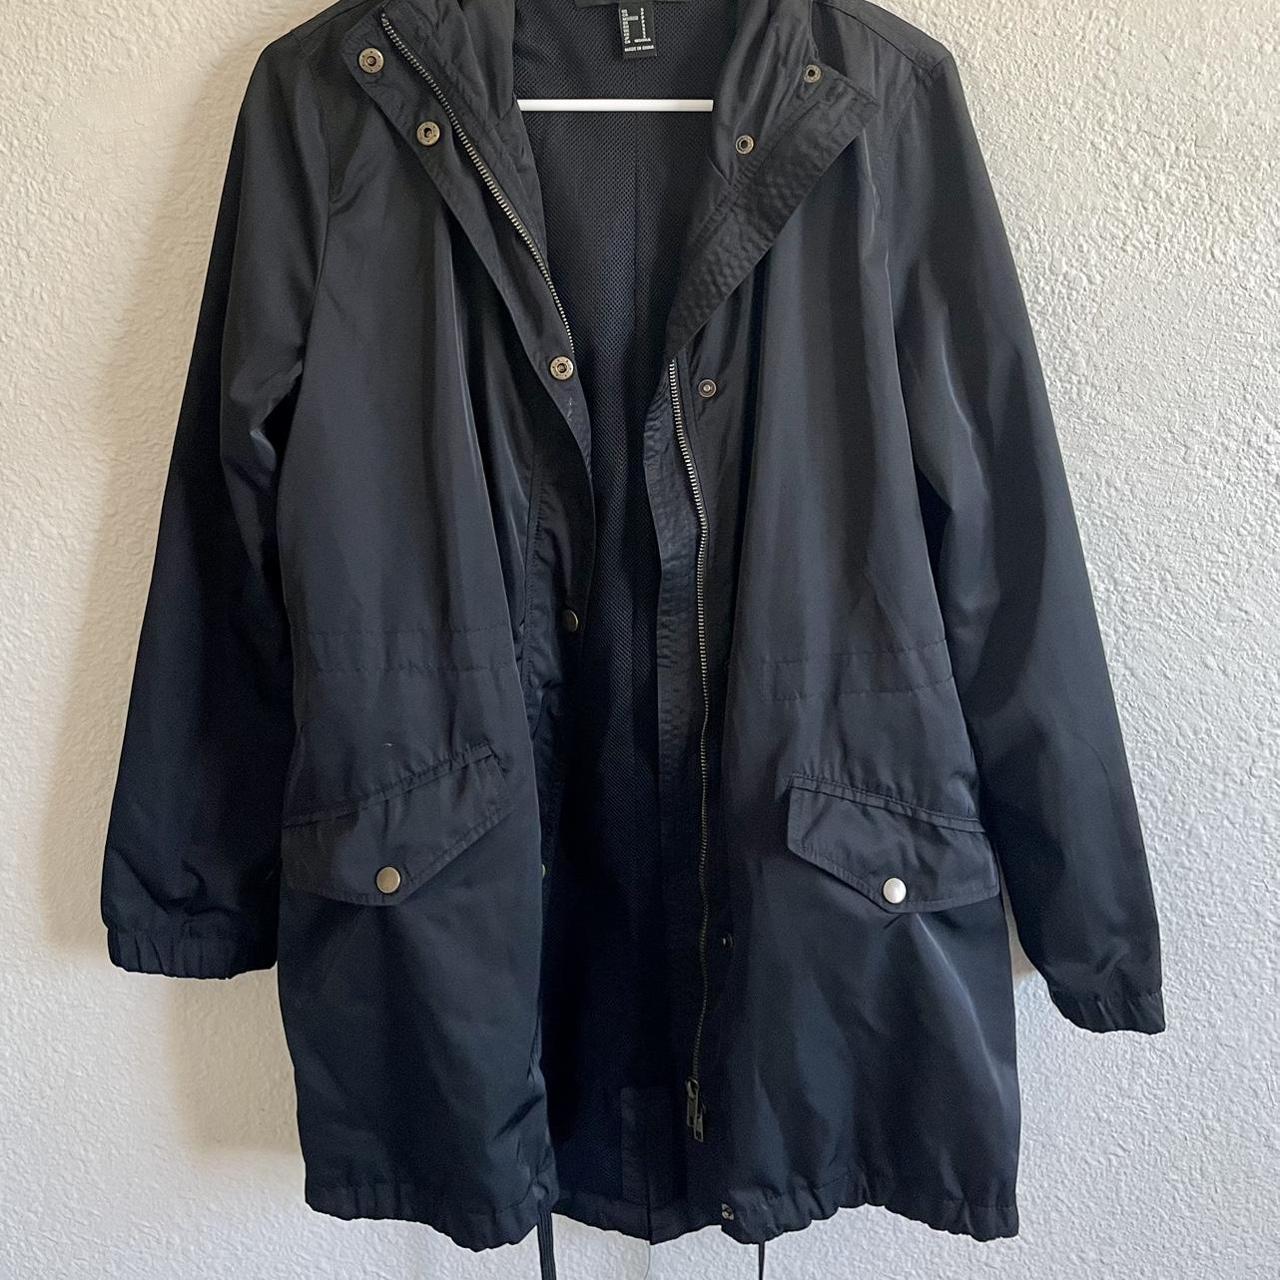 Black long rain coat/ trench coat. - Depop